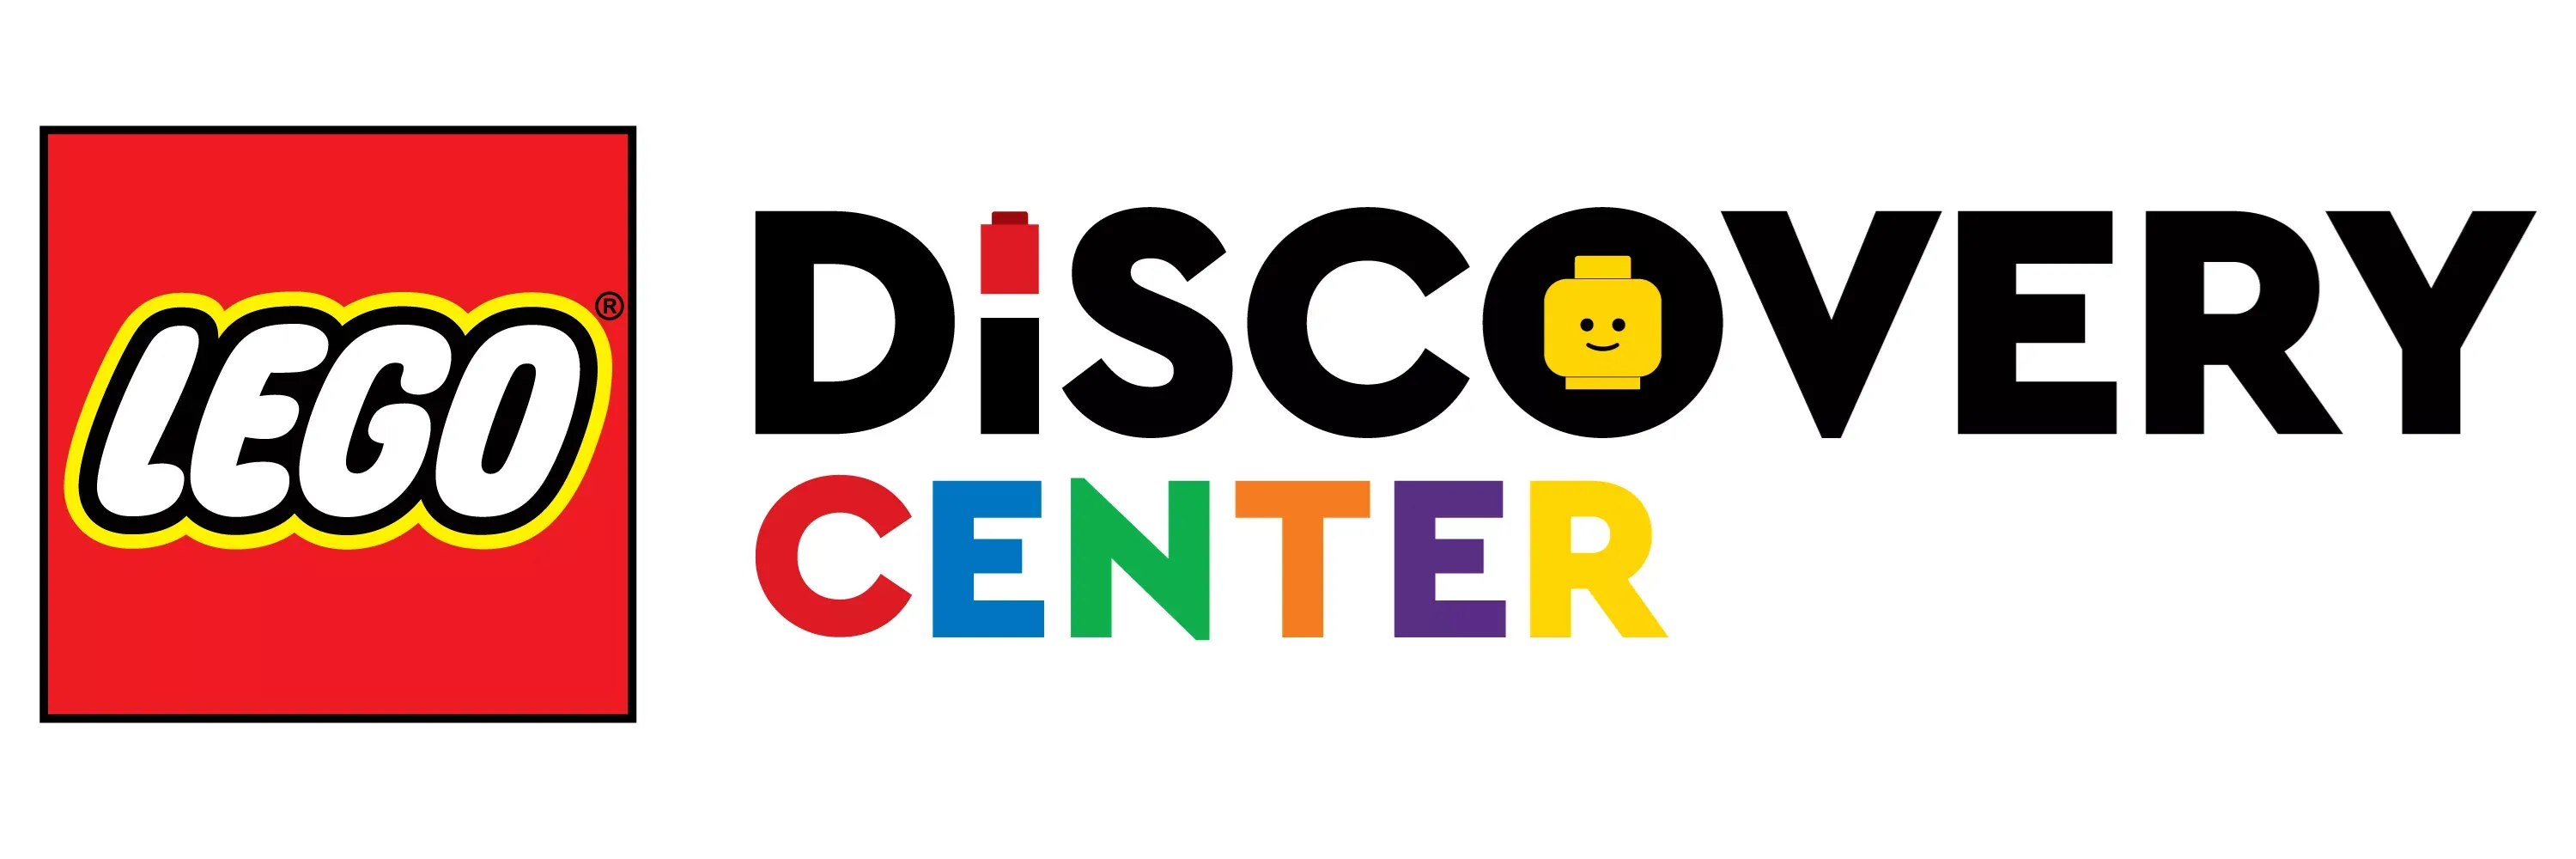 Receive A 35% On Lego Discovery Center Washington Dc At Legoland Boston Ebt